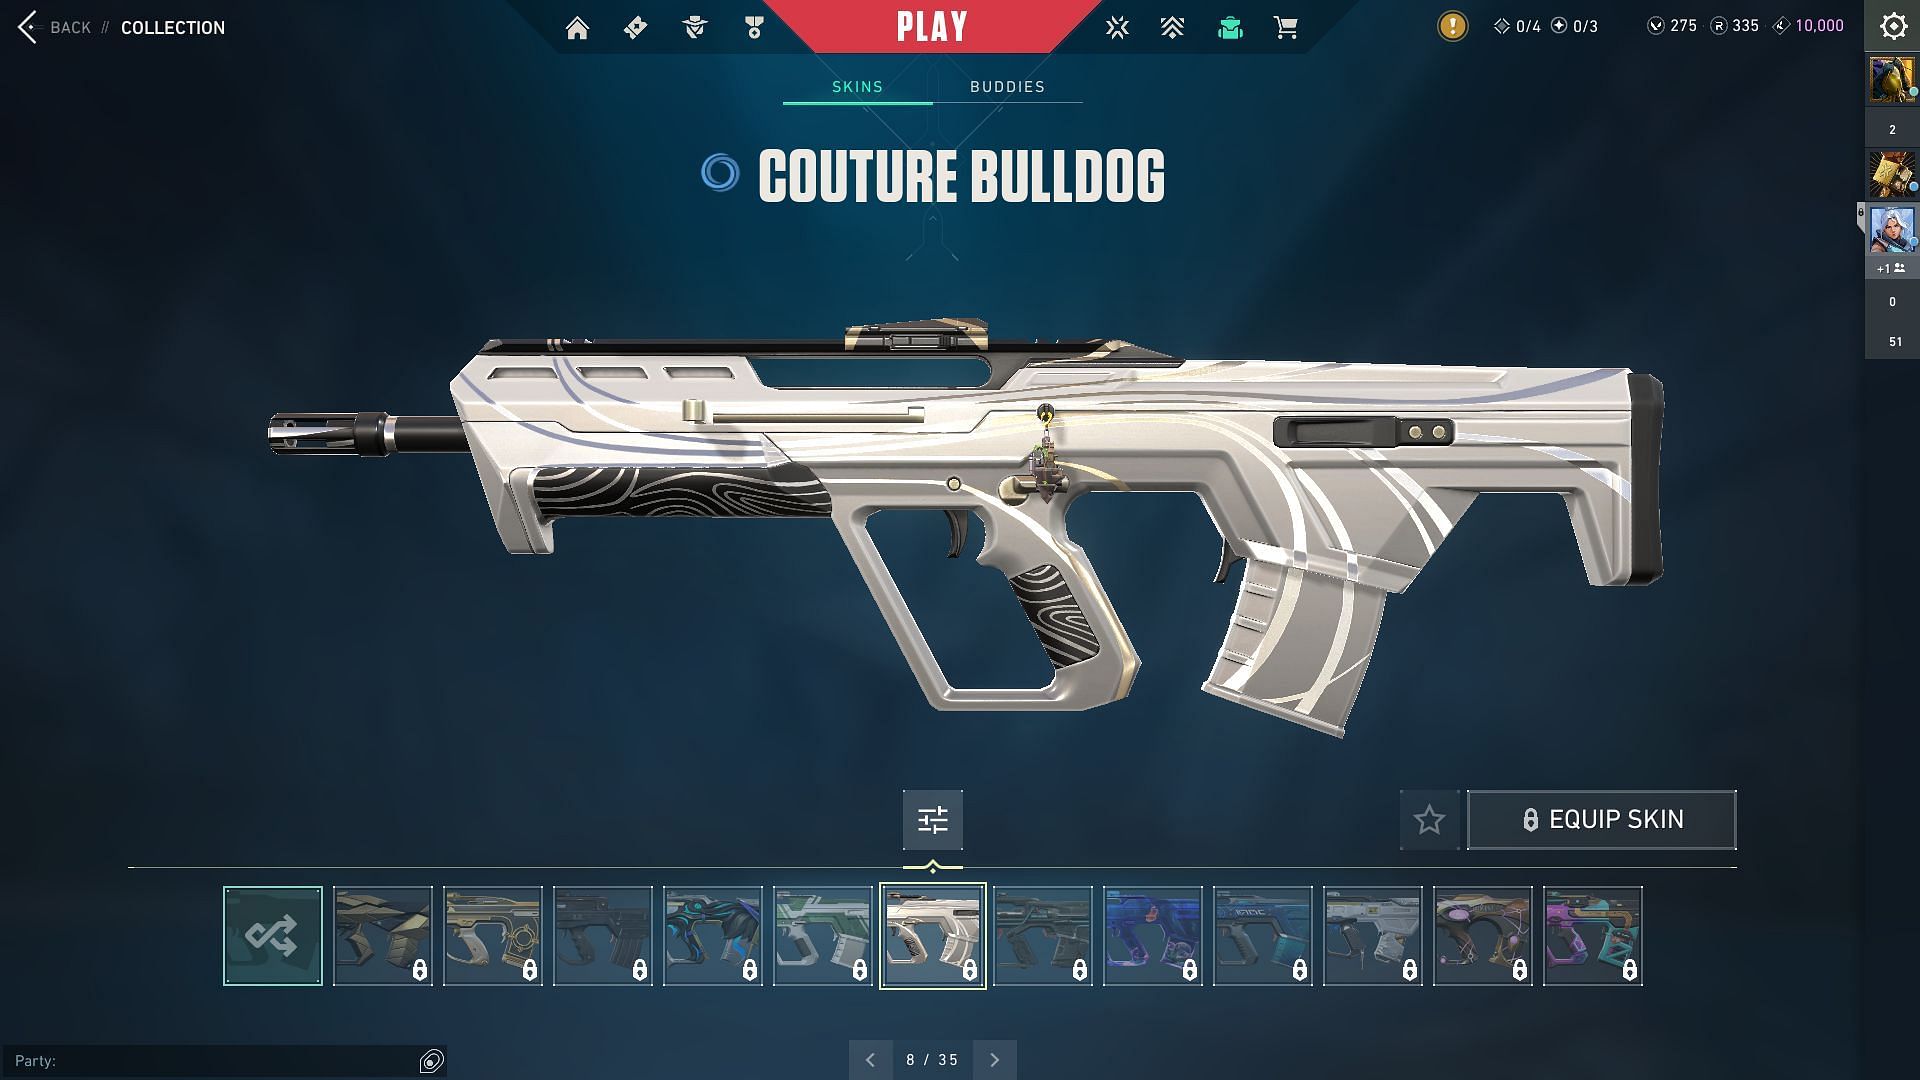 Couture Bulldog (Image via Sportskeeda and Riot Games)